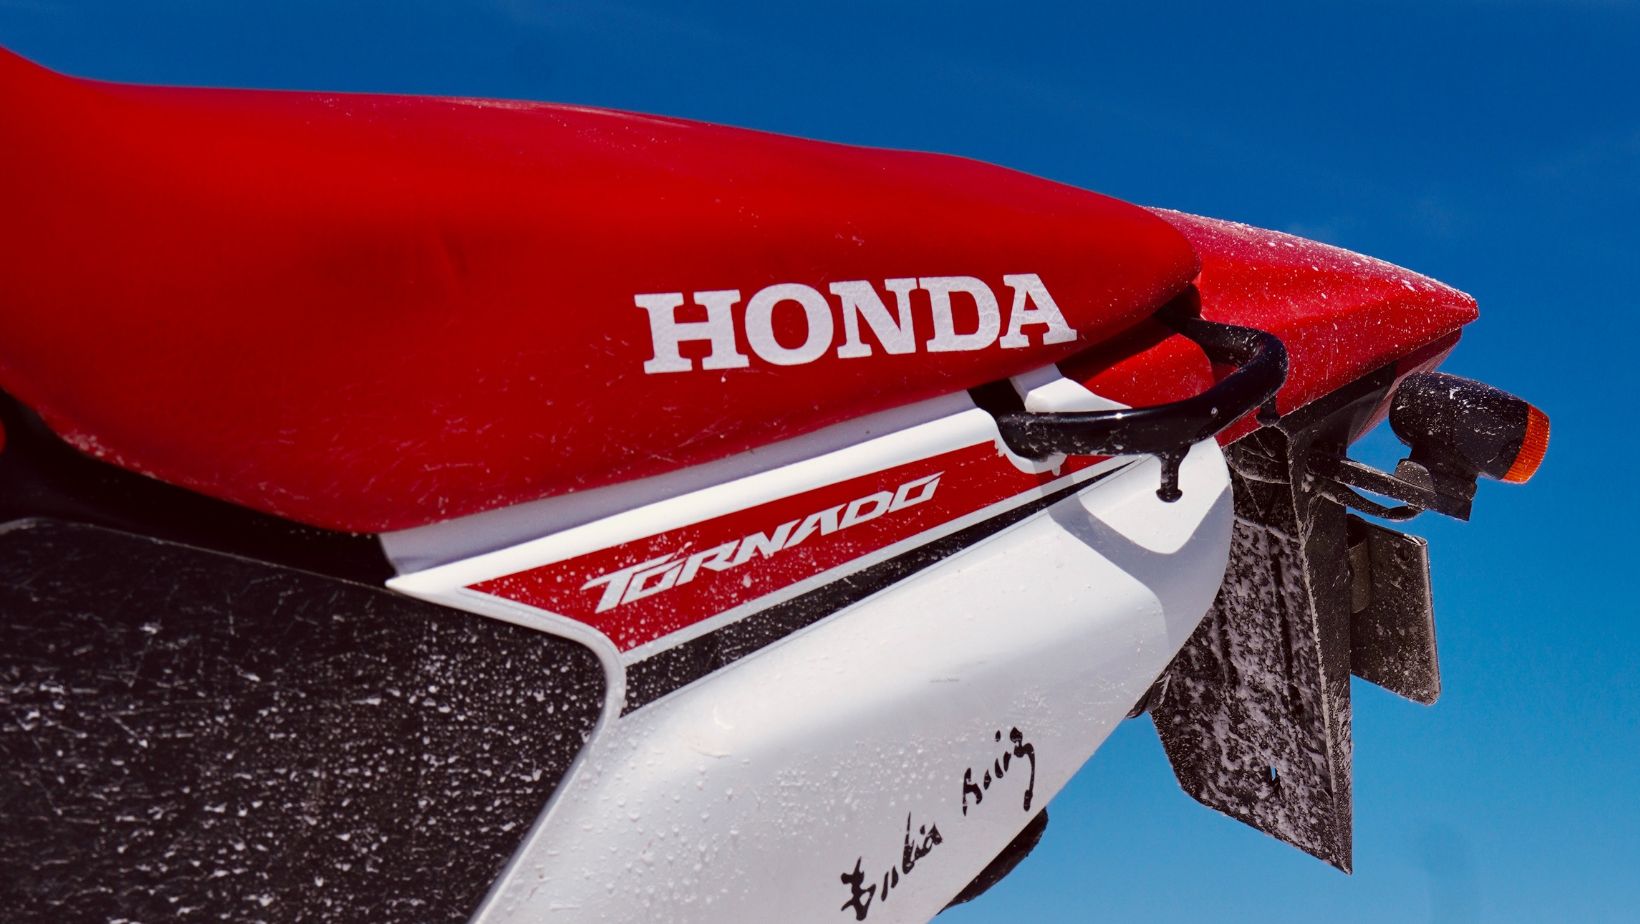 honda motorcycle for sale on ebay